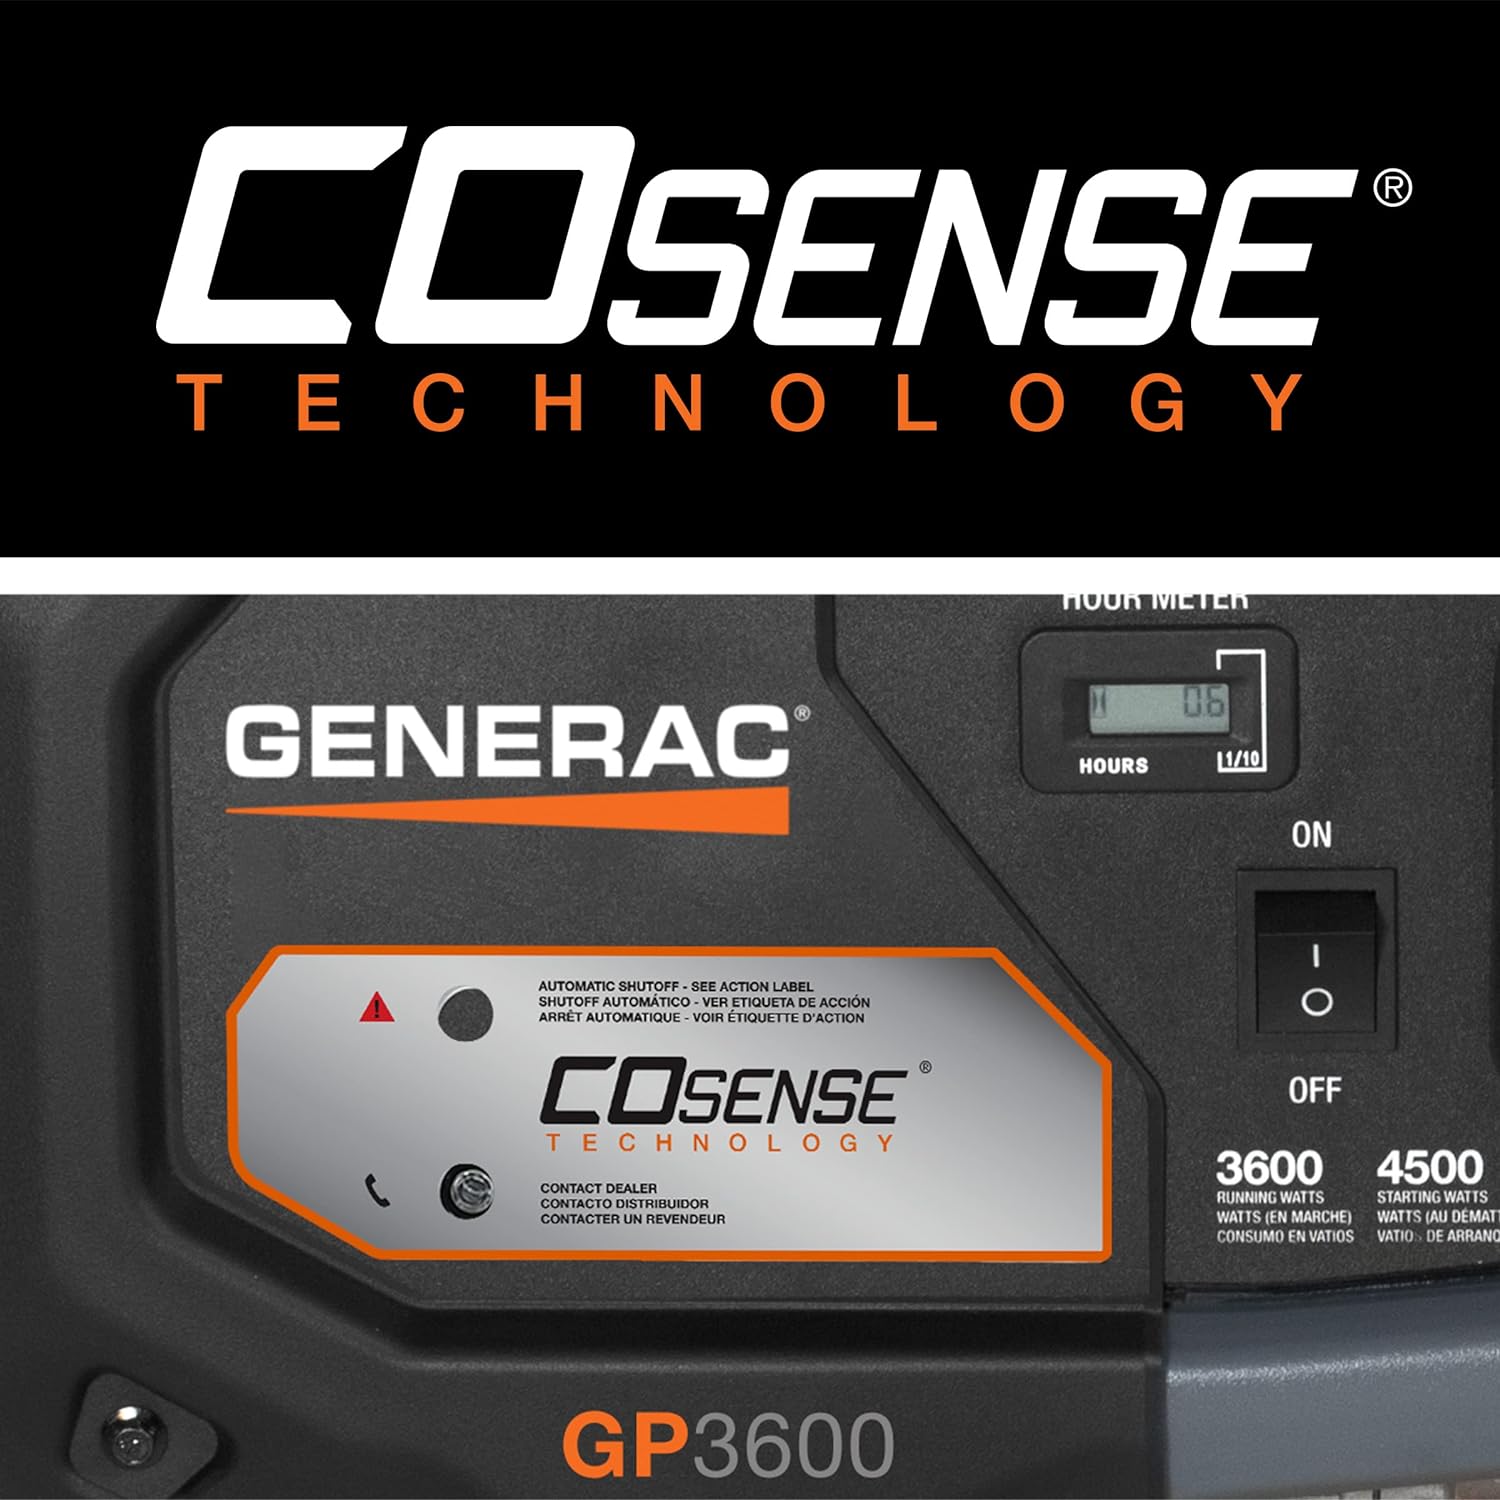 Generac 7721 GP3600 Gas Portable Generator with COSense Technology